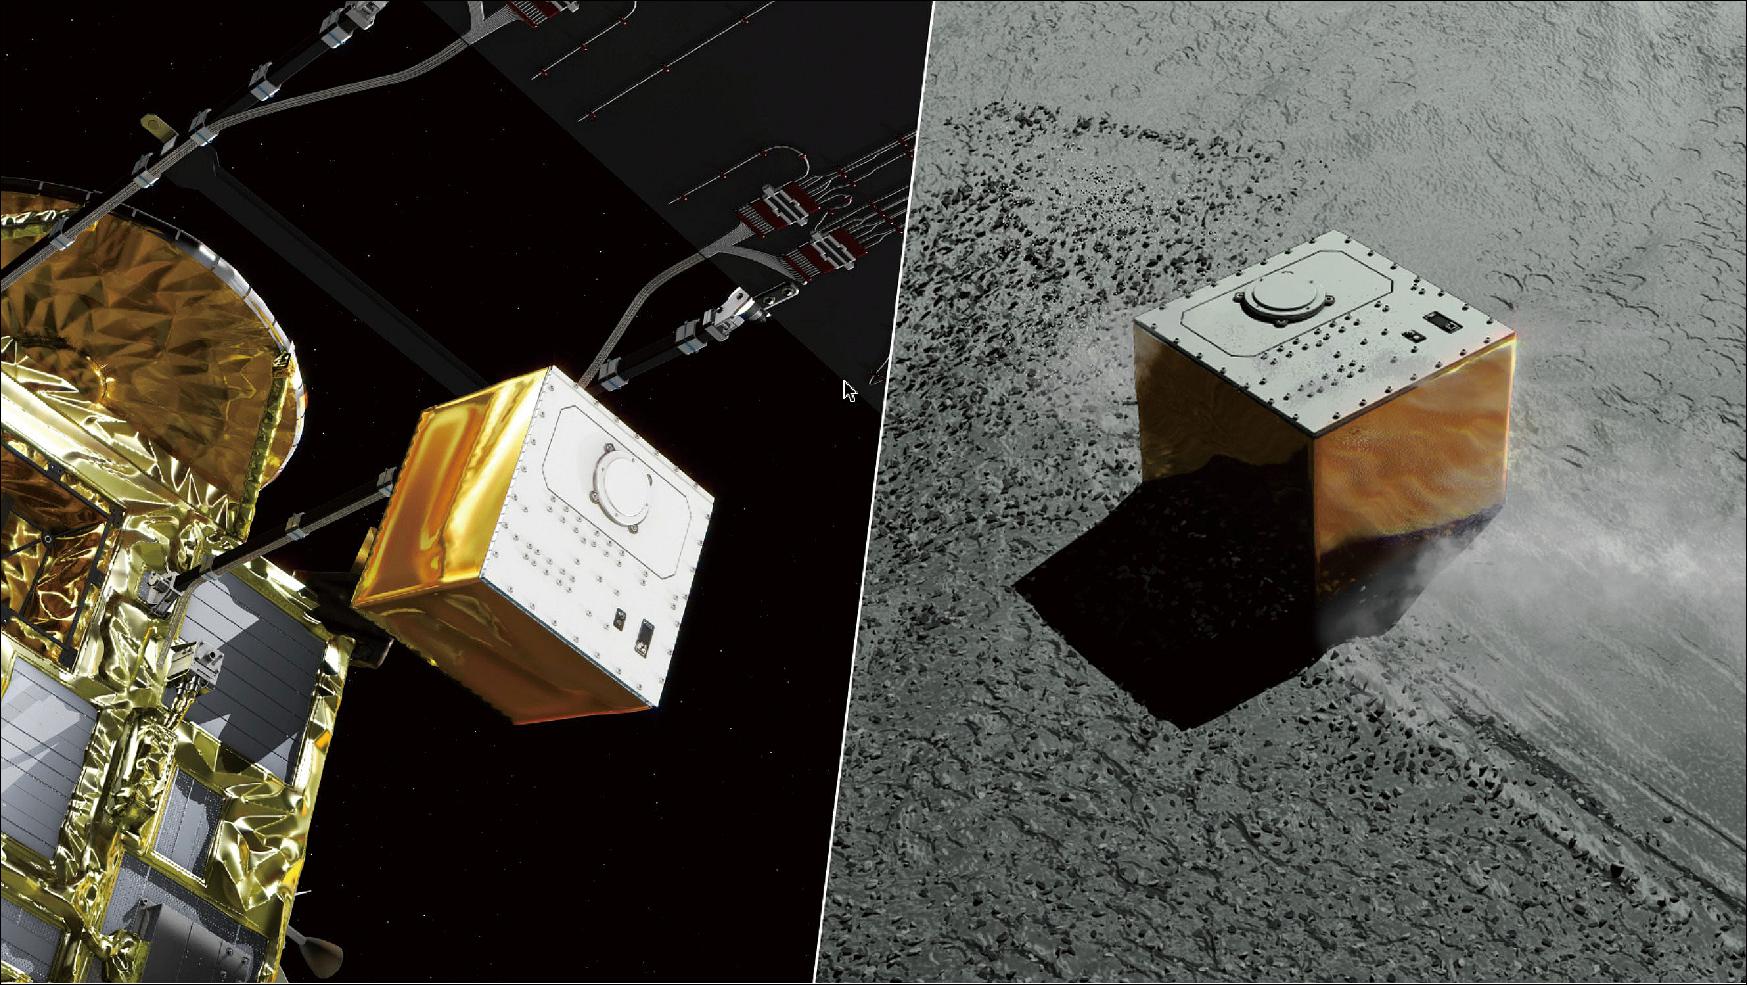 Figure 85: Left: Illustration of MASCOT separating from Hayabusa-2. Right: Illustration of MASCOT landing on the surface of Ryugu (image credit: JAXA, Ref. 71)